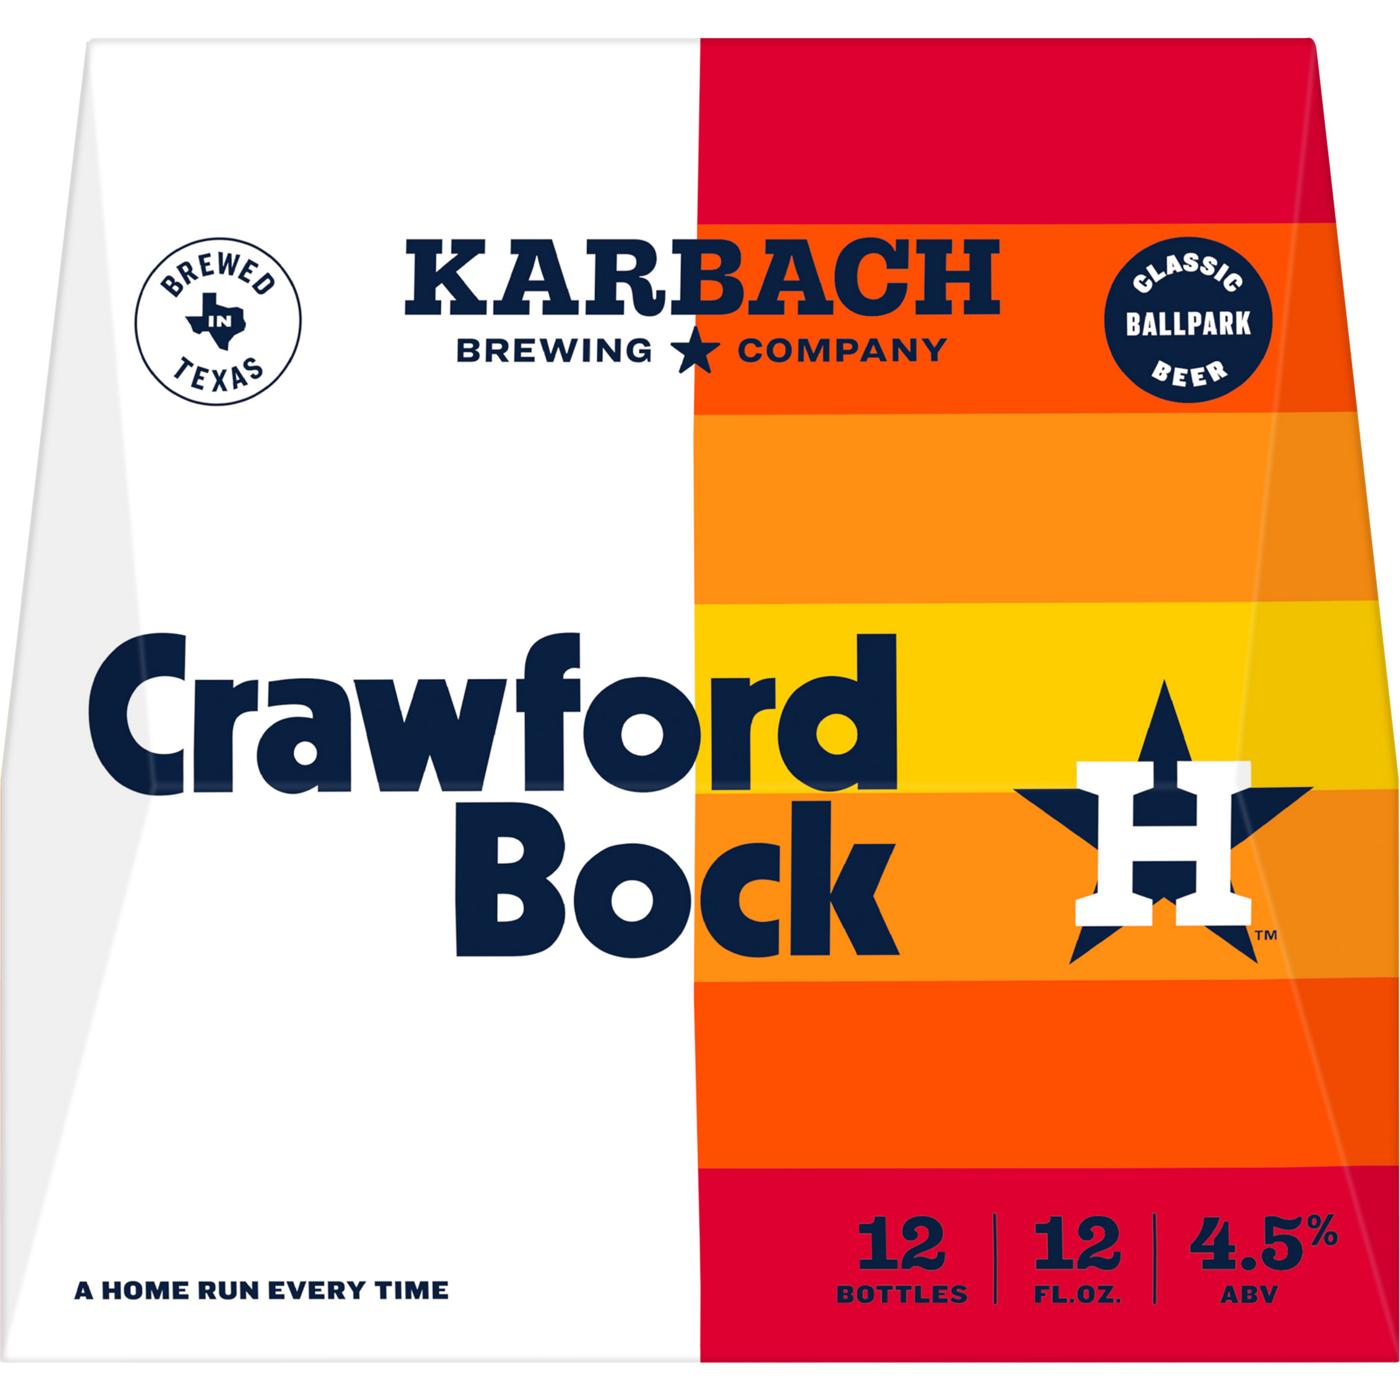 Karbach Crawford Bock Beer 12 oz Bottles; image 2 of 2